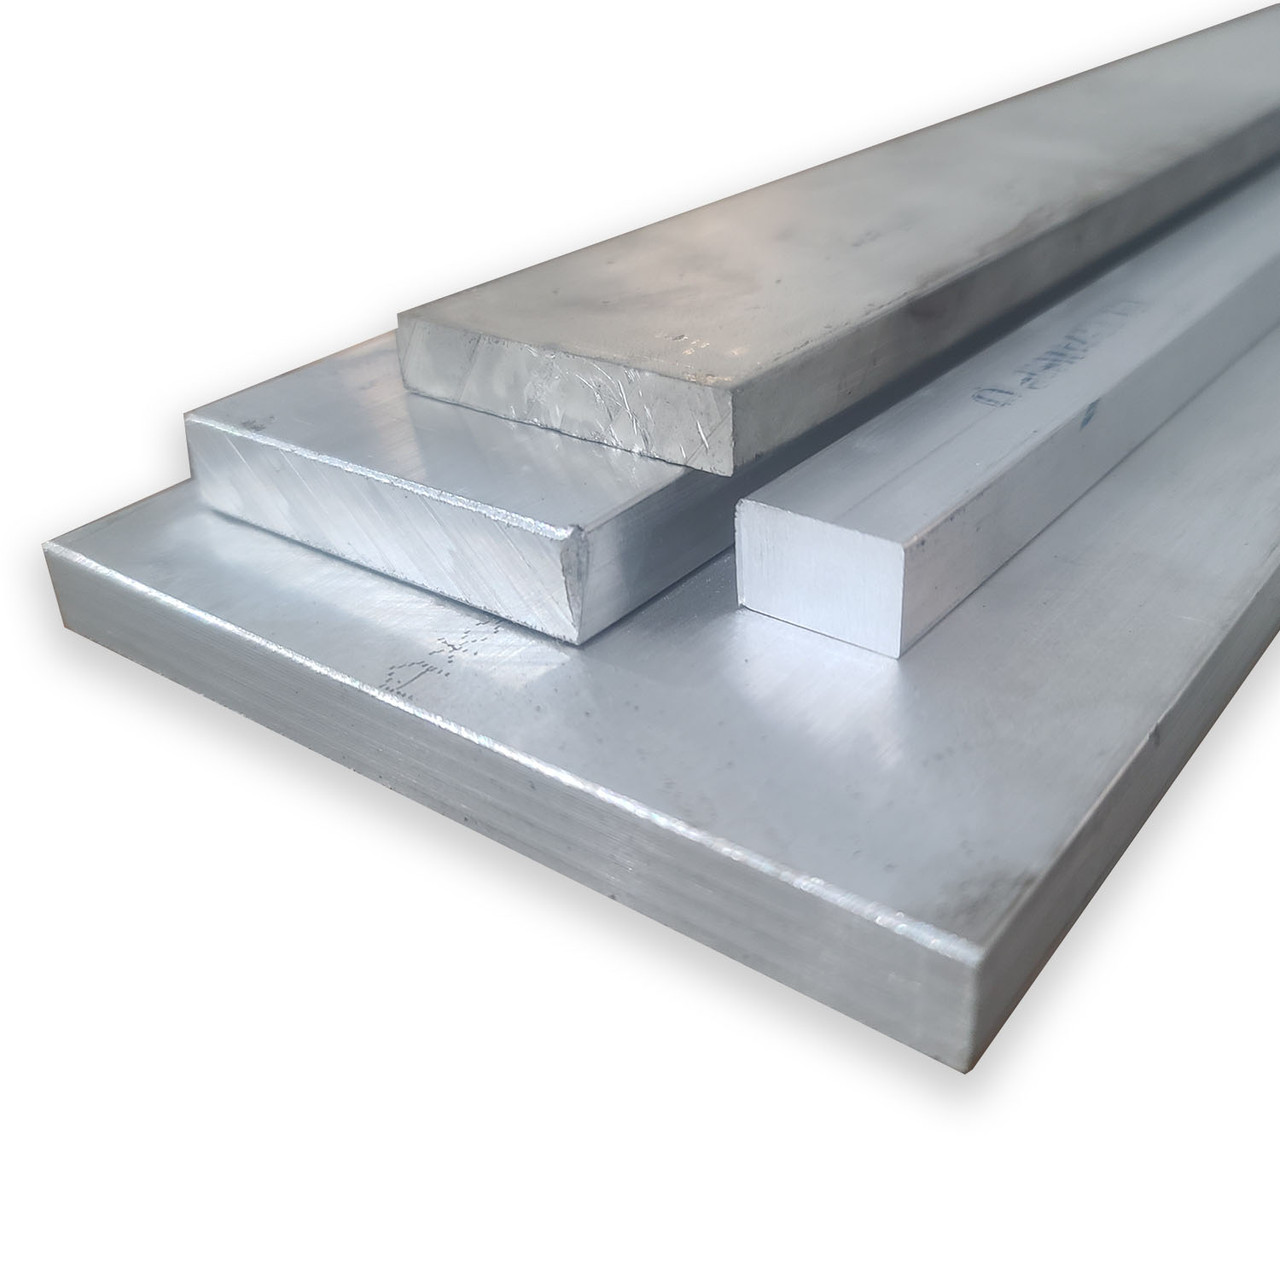 1.25" x 2" x 11", 2024-T351 Aluminum Flat Bar